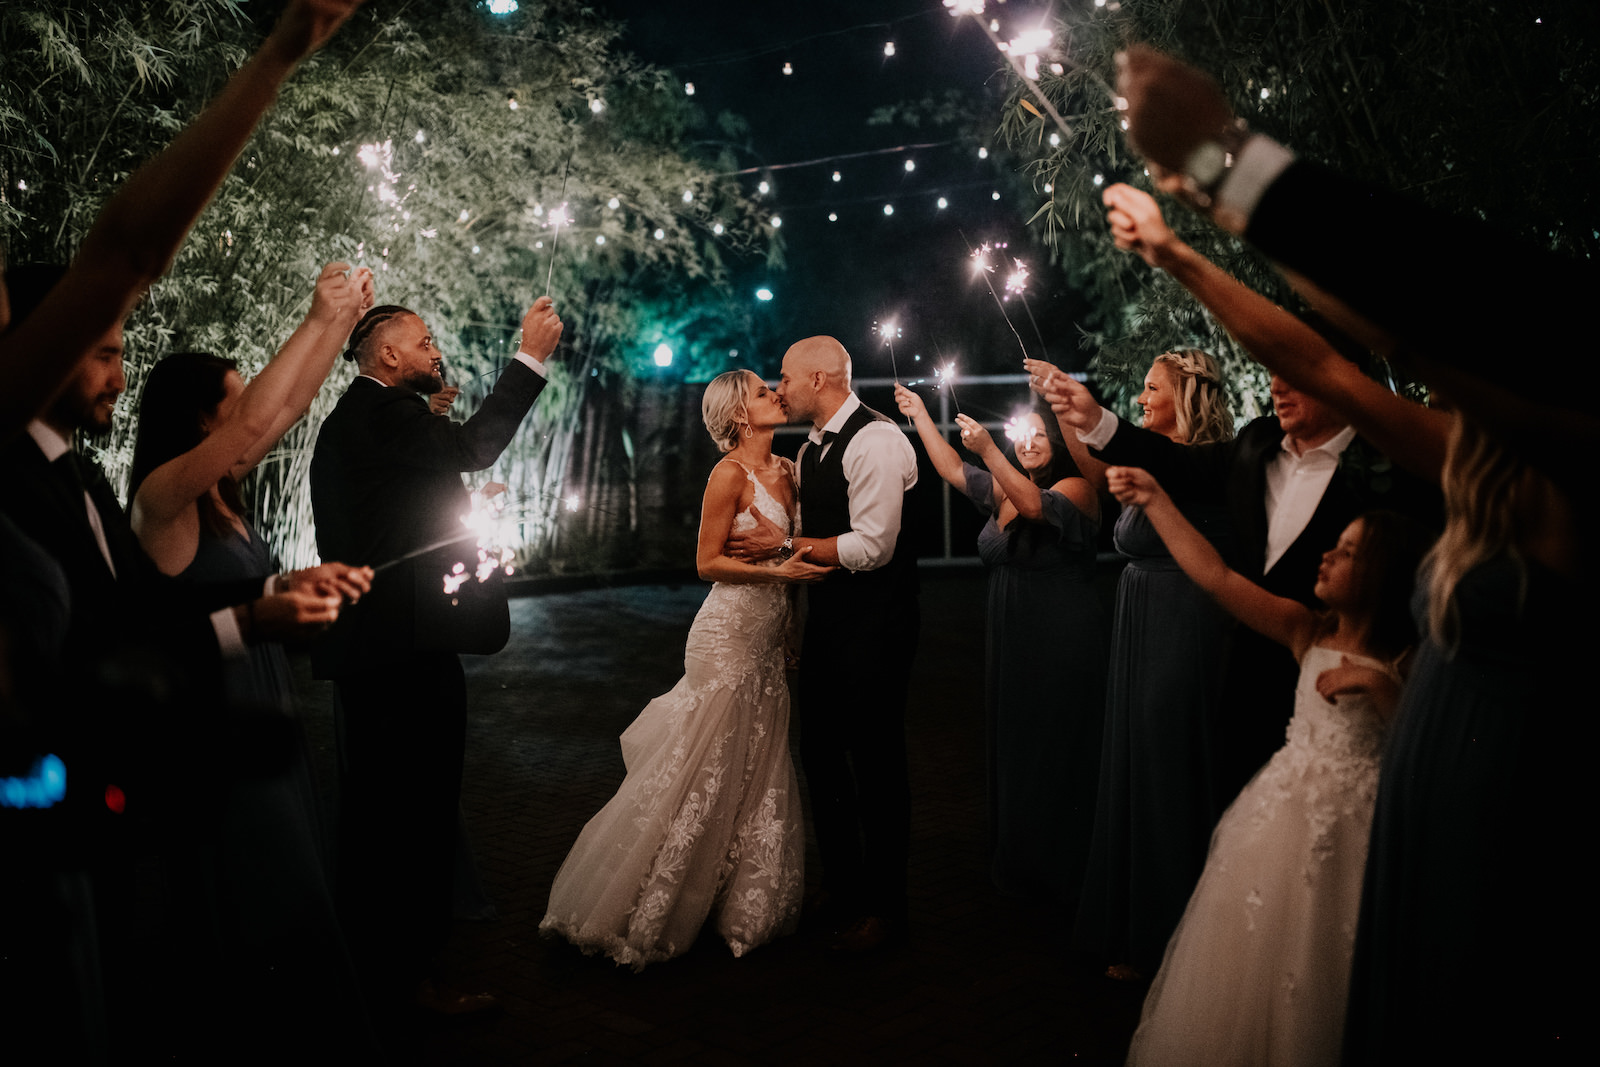 Tampa Bay Bride and Groom Kiss During Sparkler Light Wedding Exit in Bamboo Courtyard | Unique Florida Wedding Venue NOVA 535